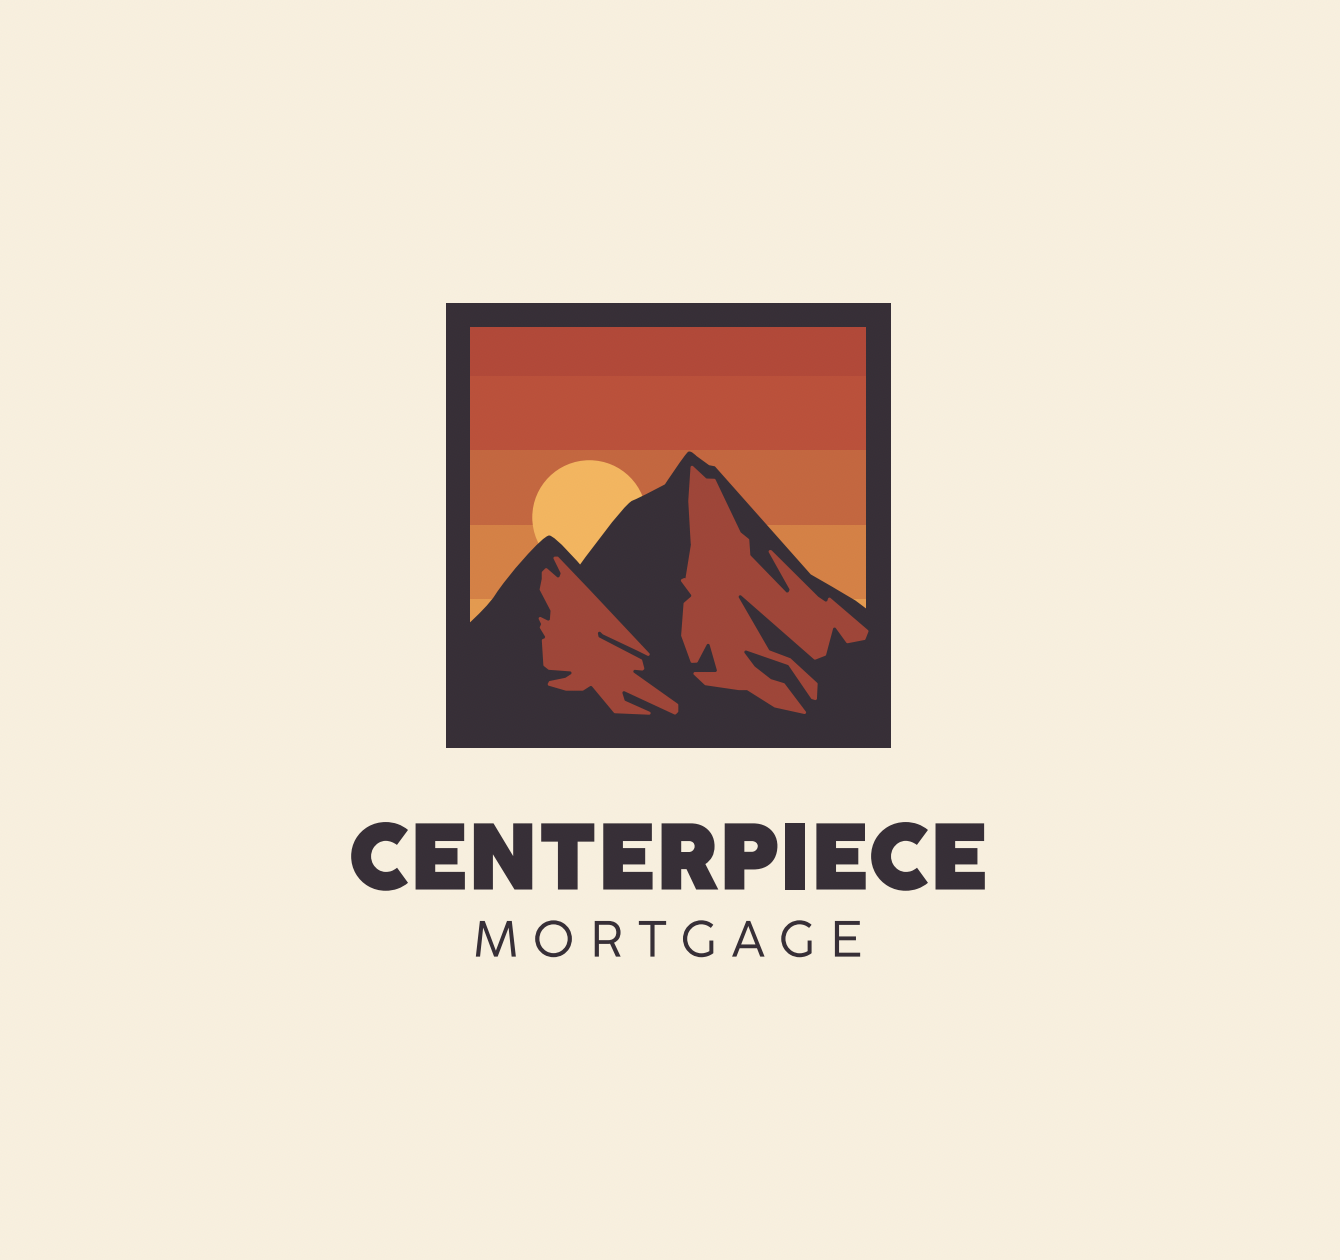 Centerpiece Mortgage